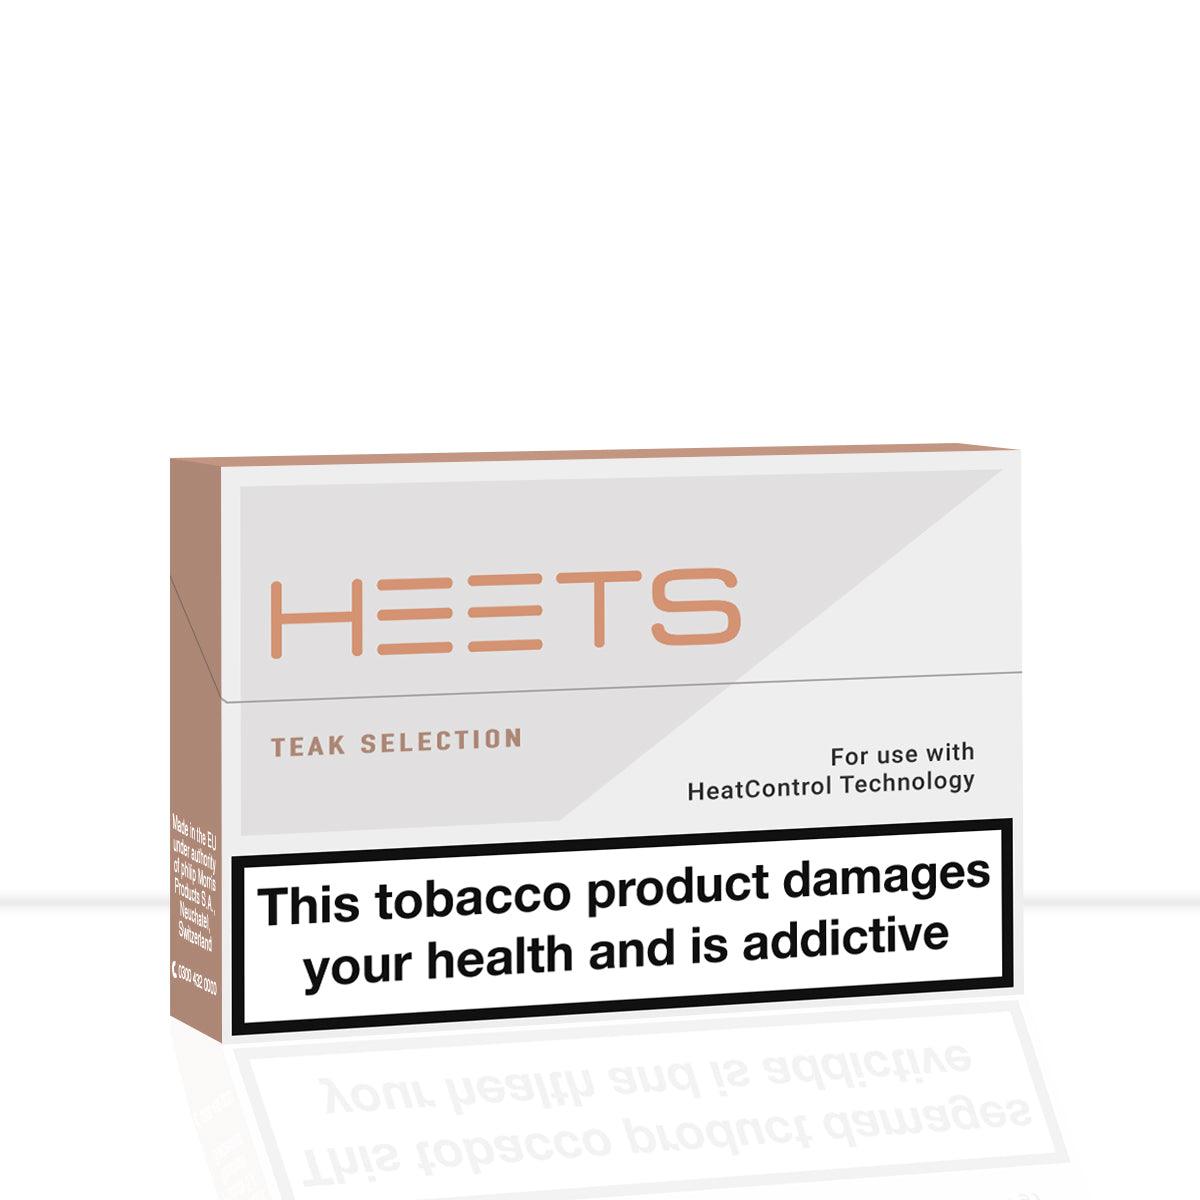 Teak Heets IQOS - Heated Tobacco